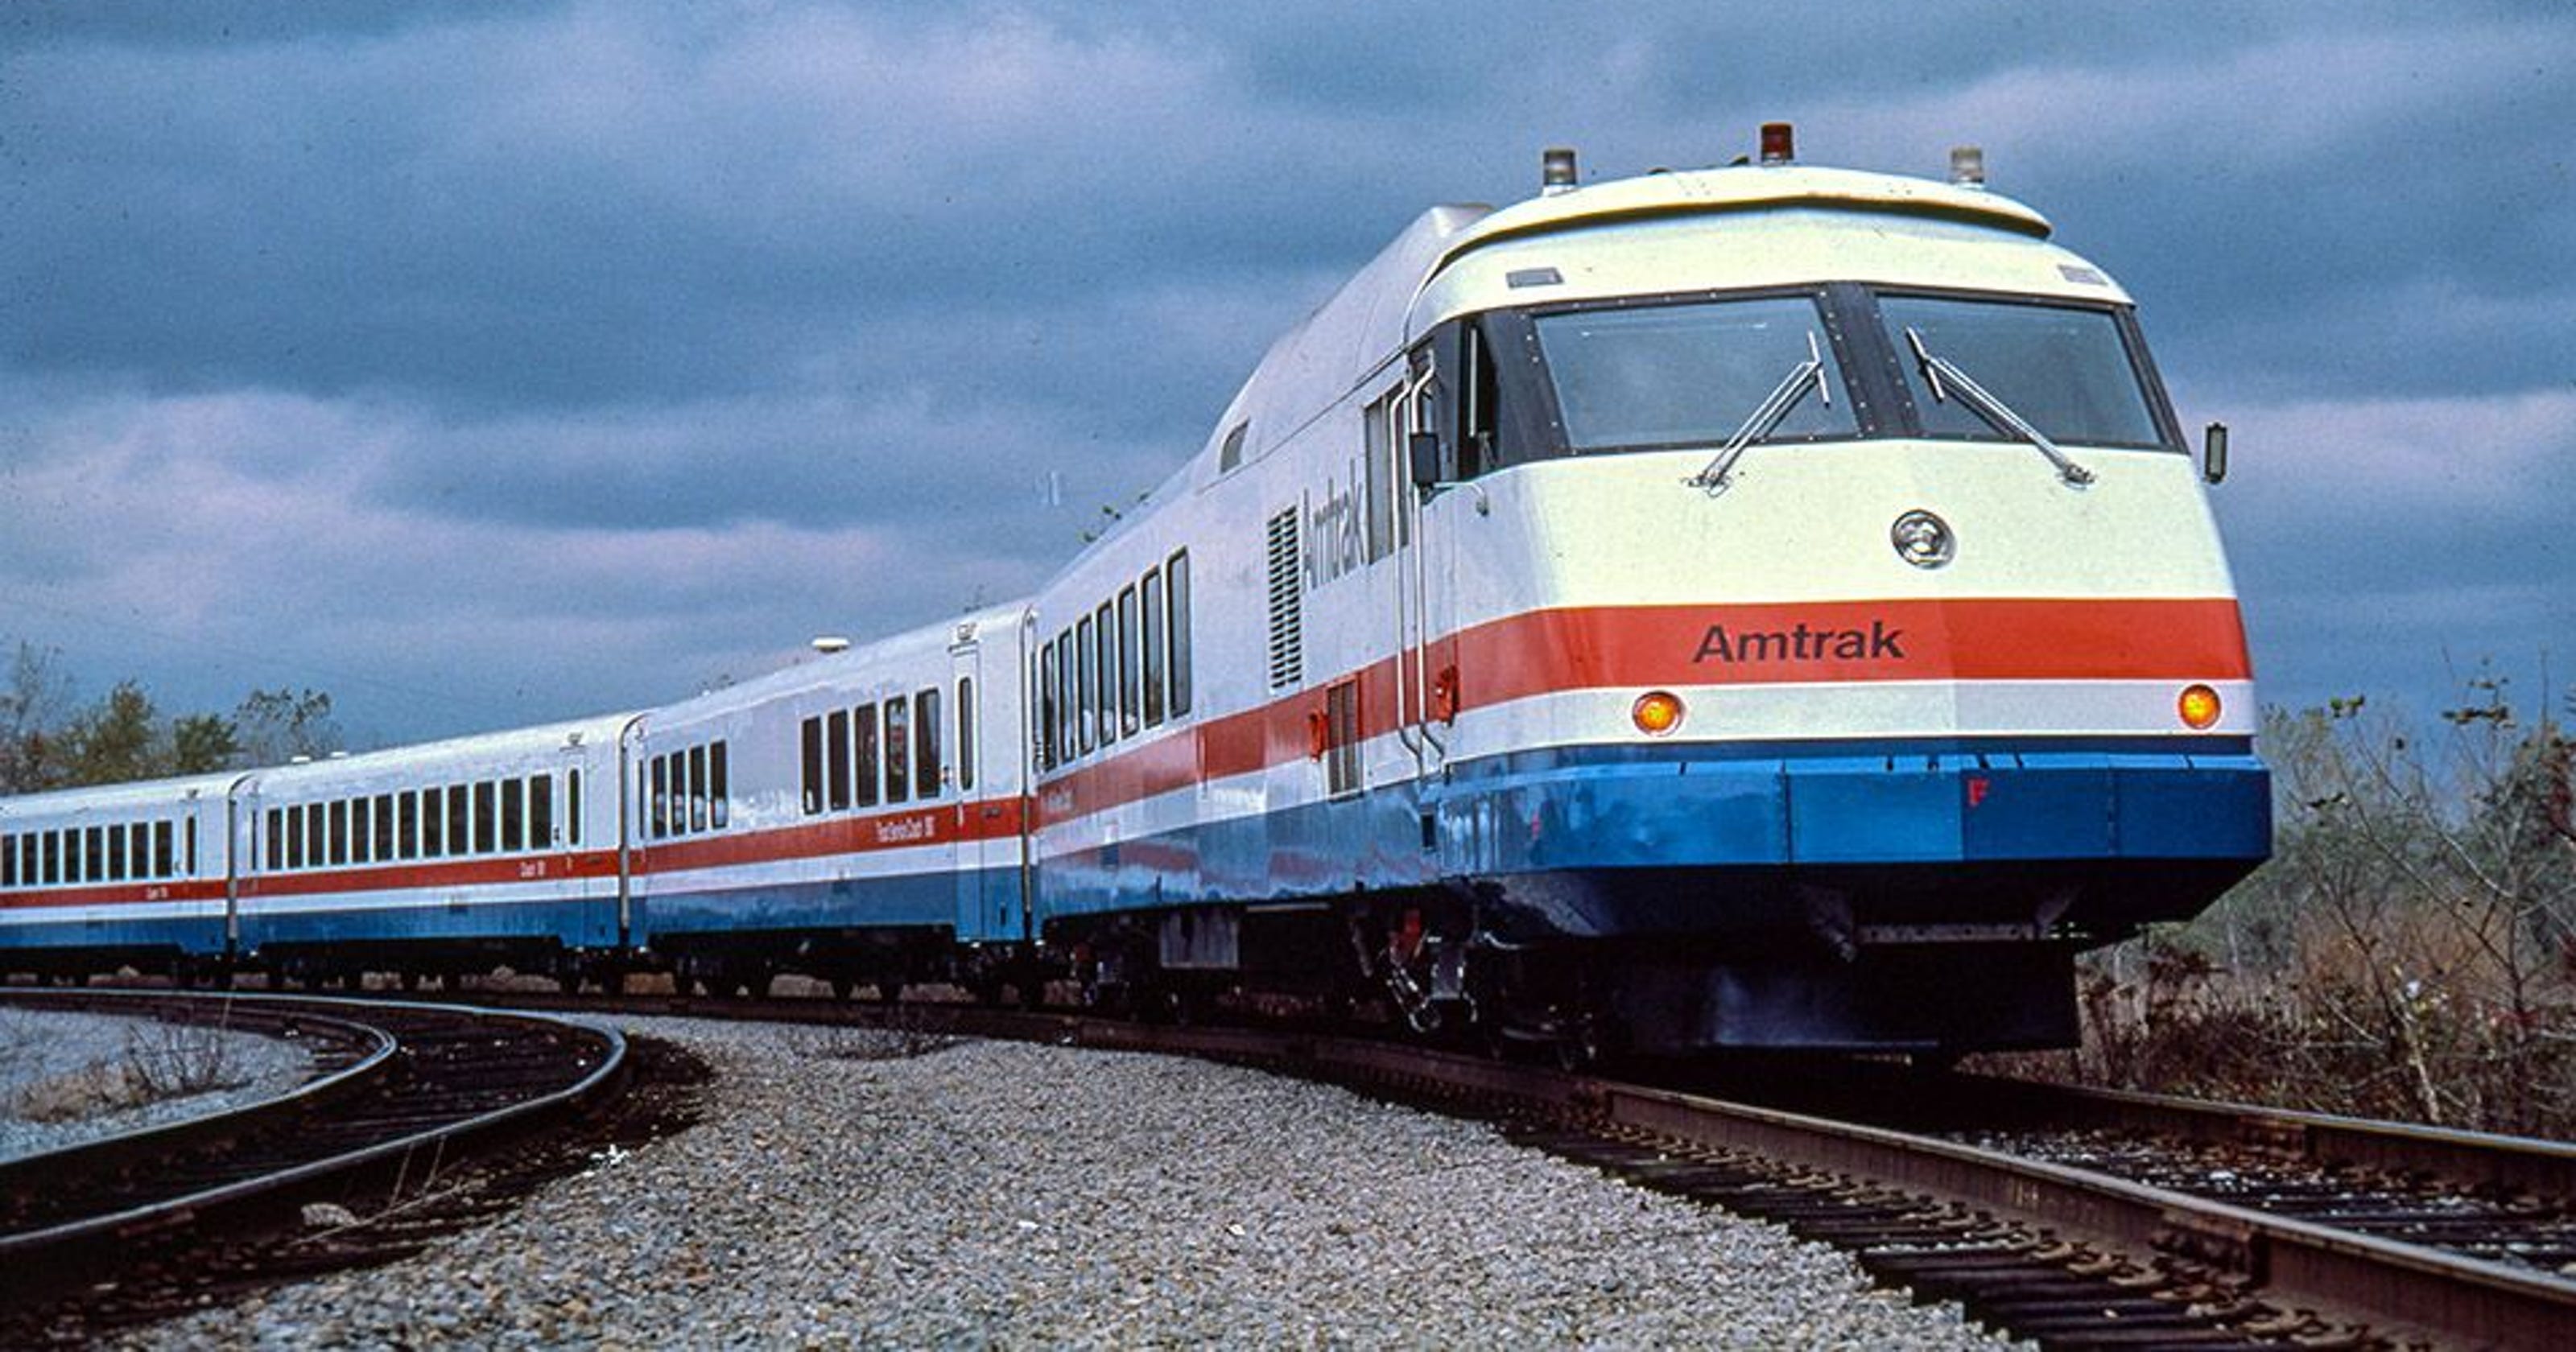 amtrak-rail-fleet-passenger-trains-from-1971-to-2018